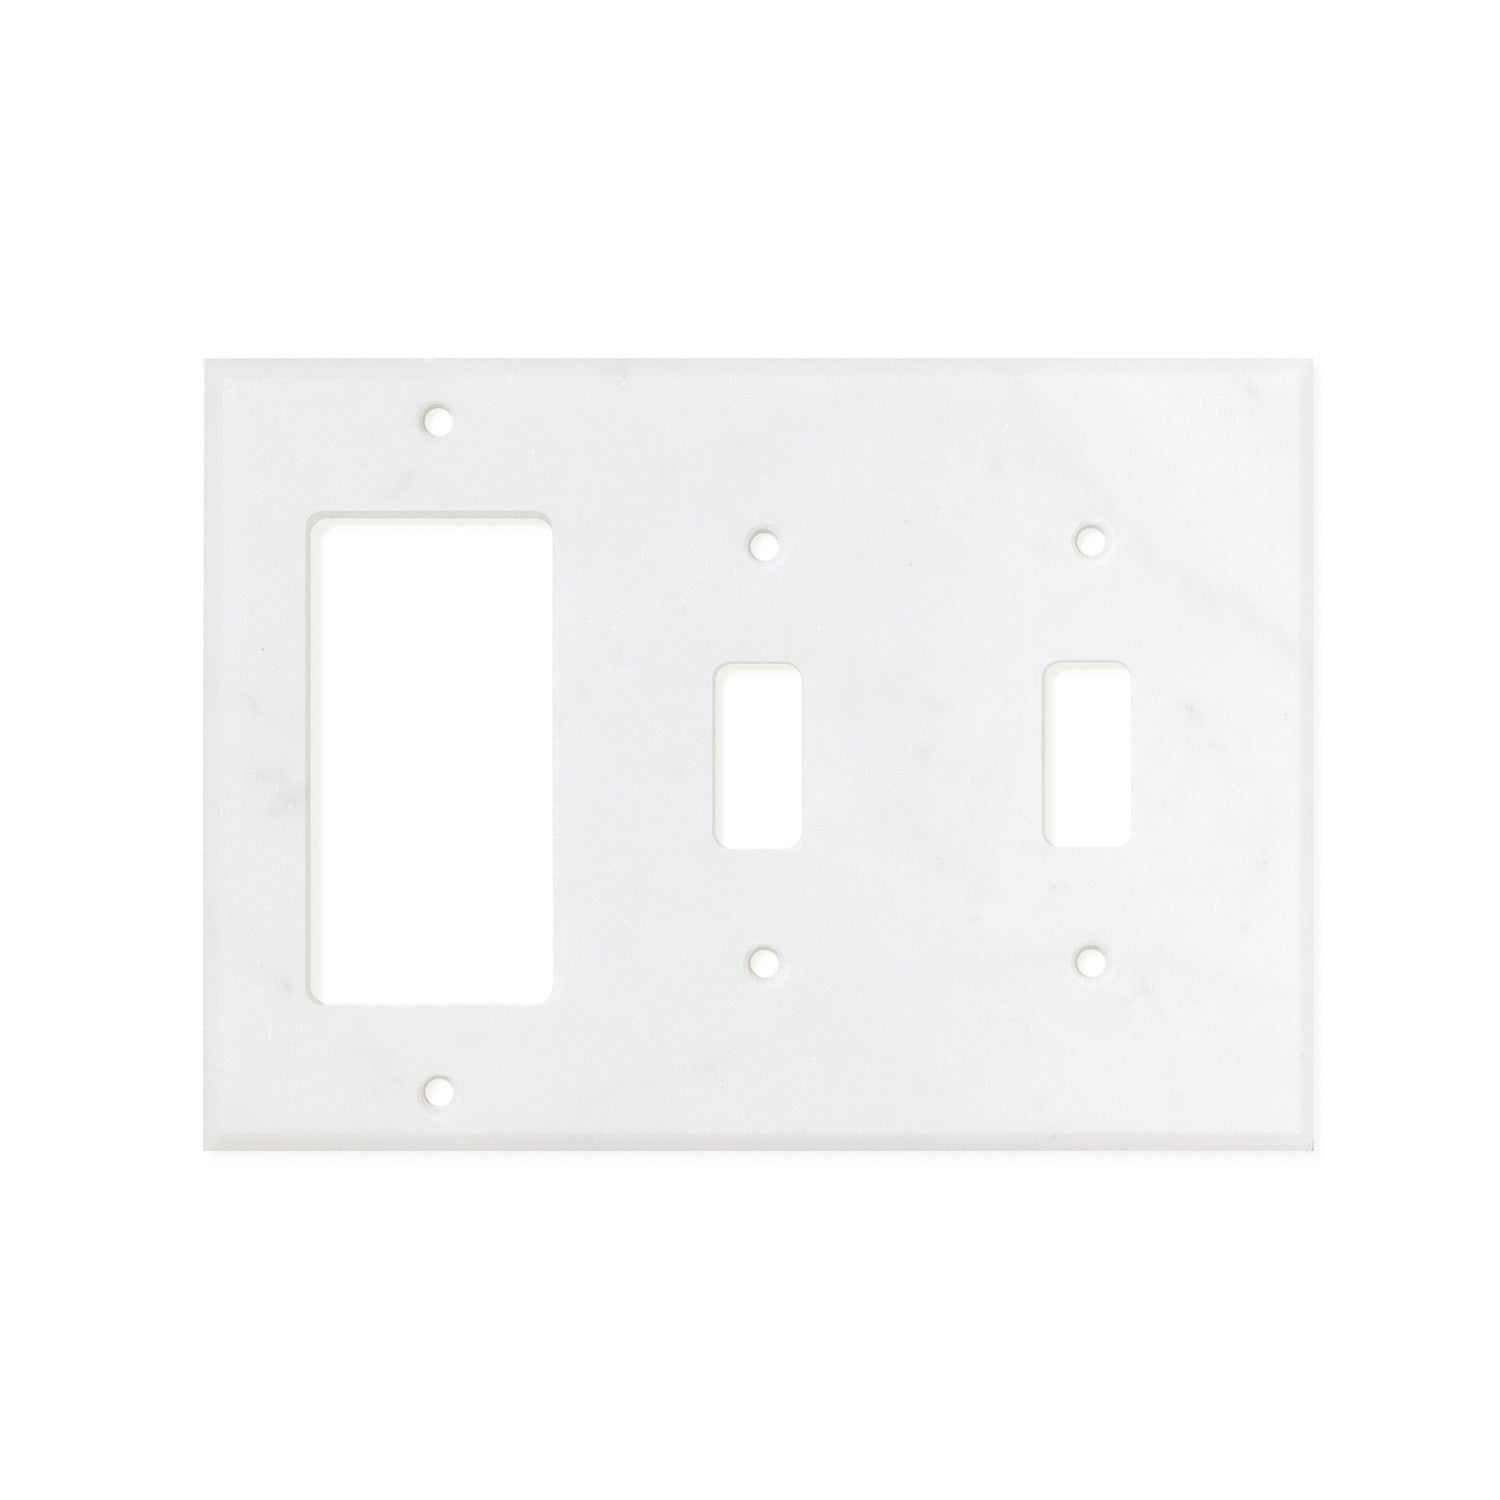 Bianco Carrara (Carrara White) Marble Switch Plate Cover, Honed (DOUBLE TOGGLE ROCKER) - Tilephile